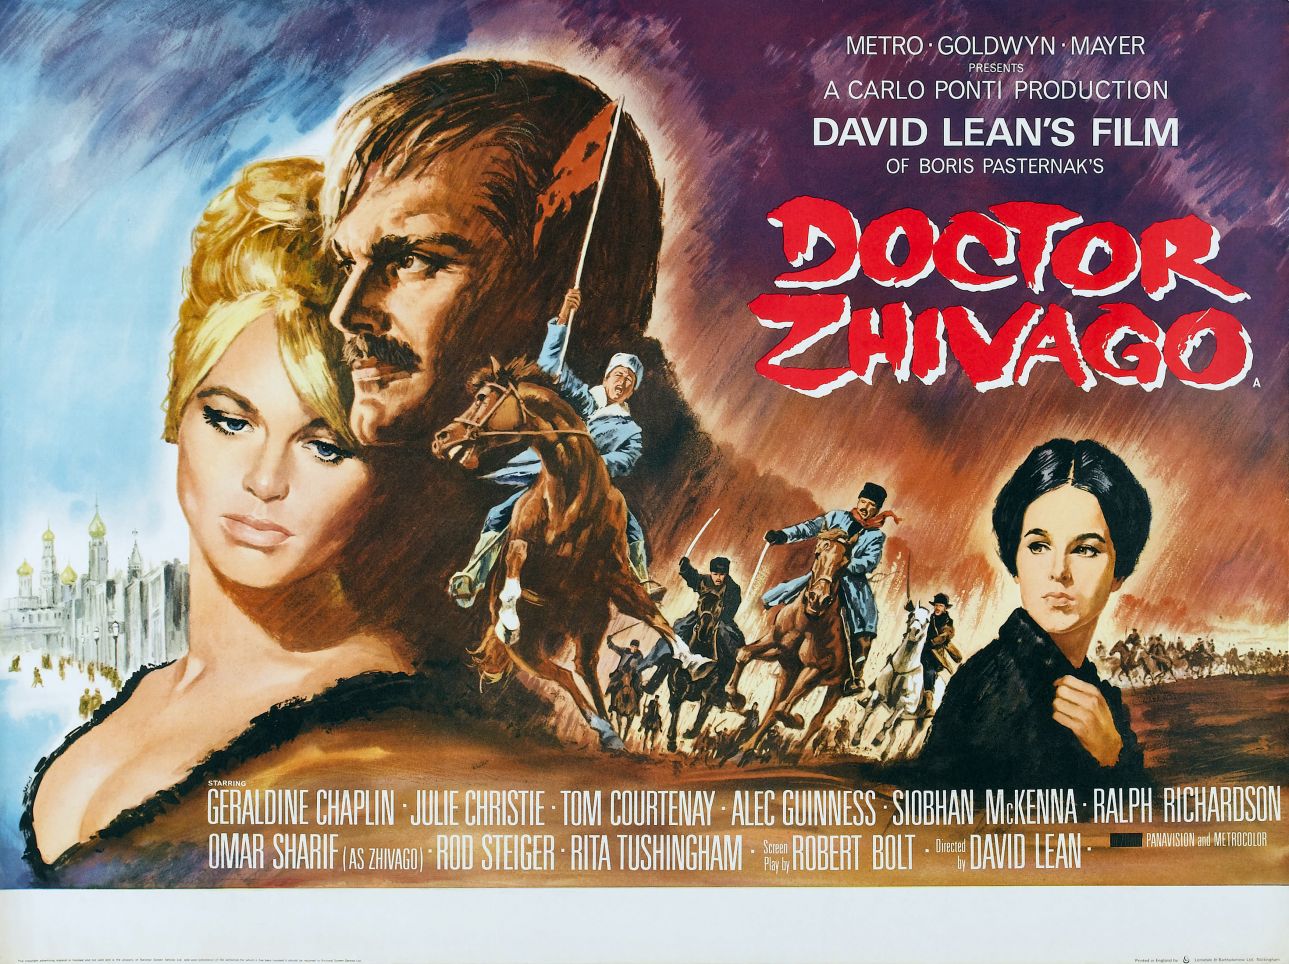 https://www.protagon.gr/wp-content/uploads/2015/12/Poster-Doctor-Zhivago_02.jpg